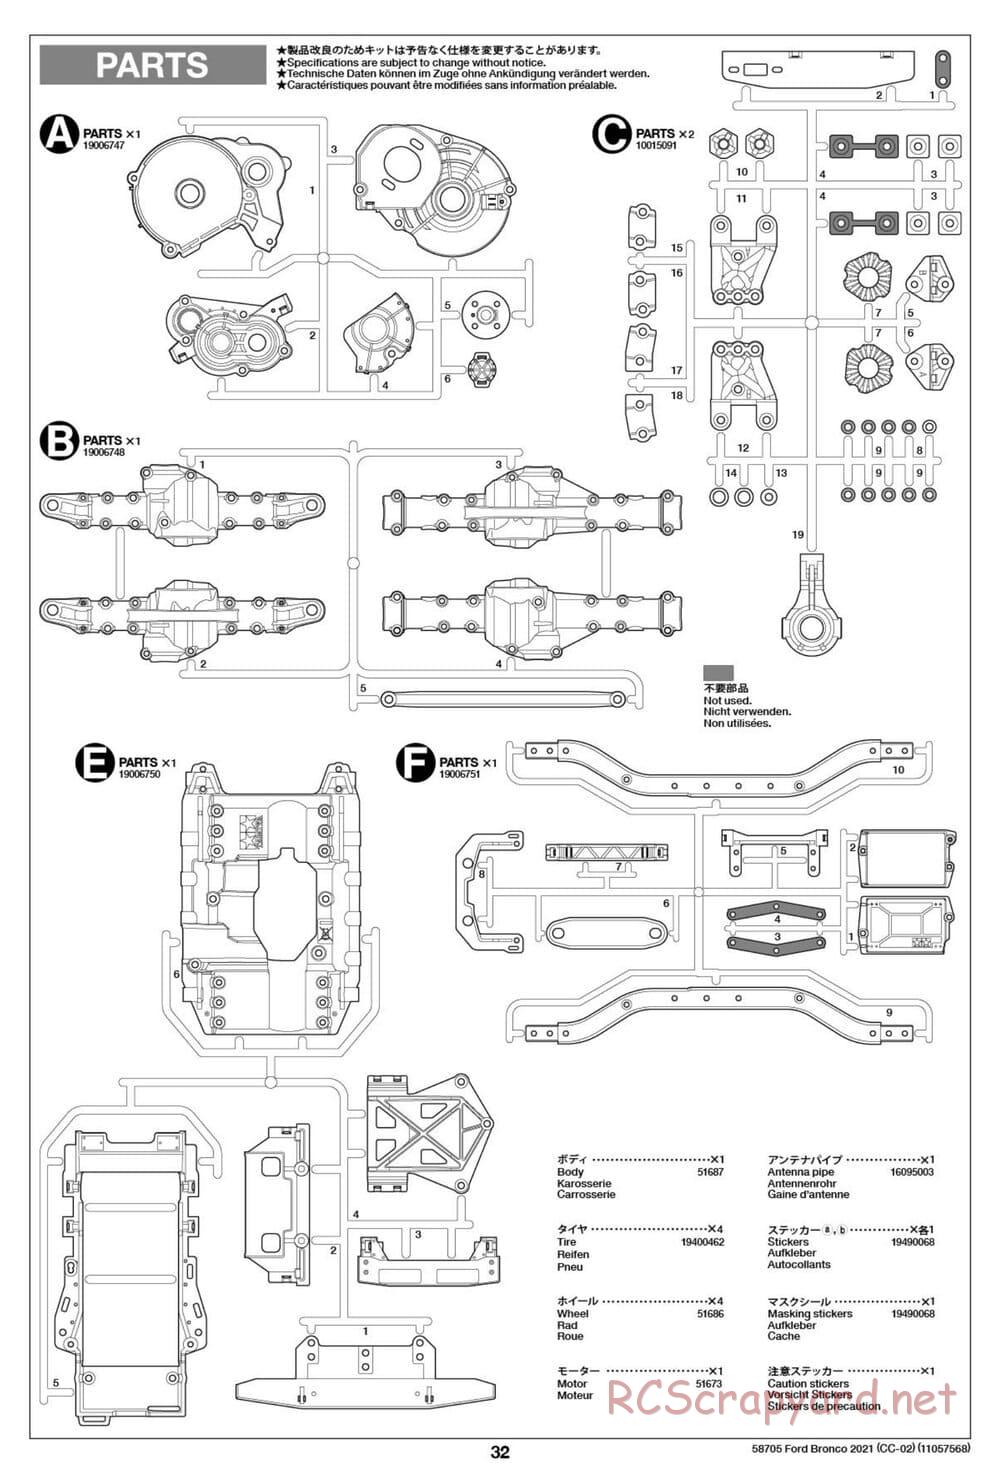 Tamiya - Ford Bronco 2021 - CC-02 Chassis - Manual - Page 32